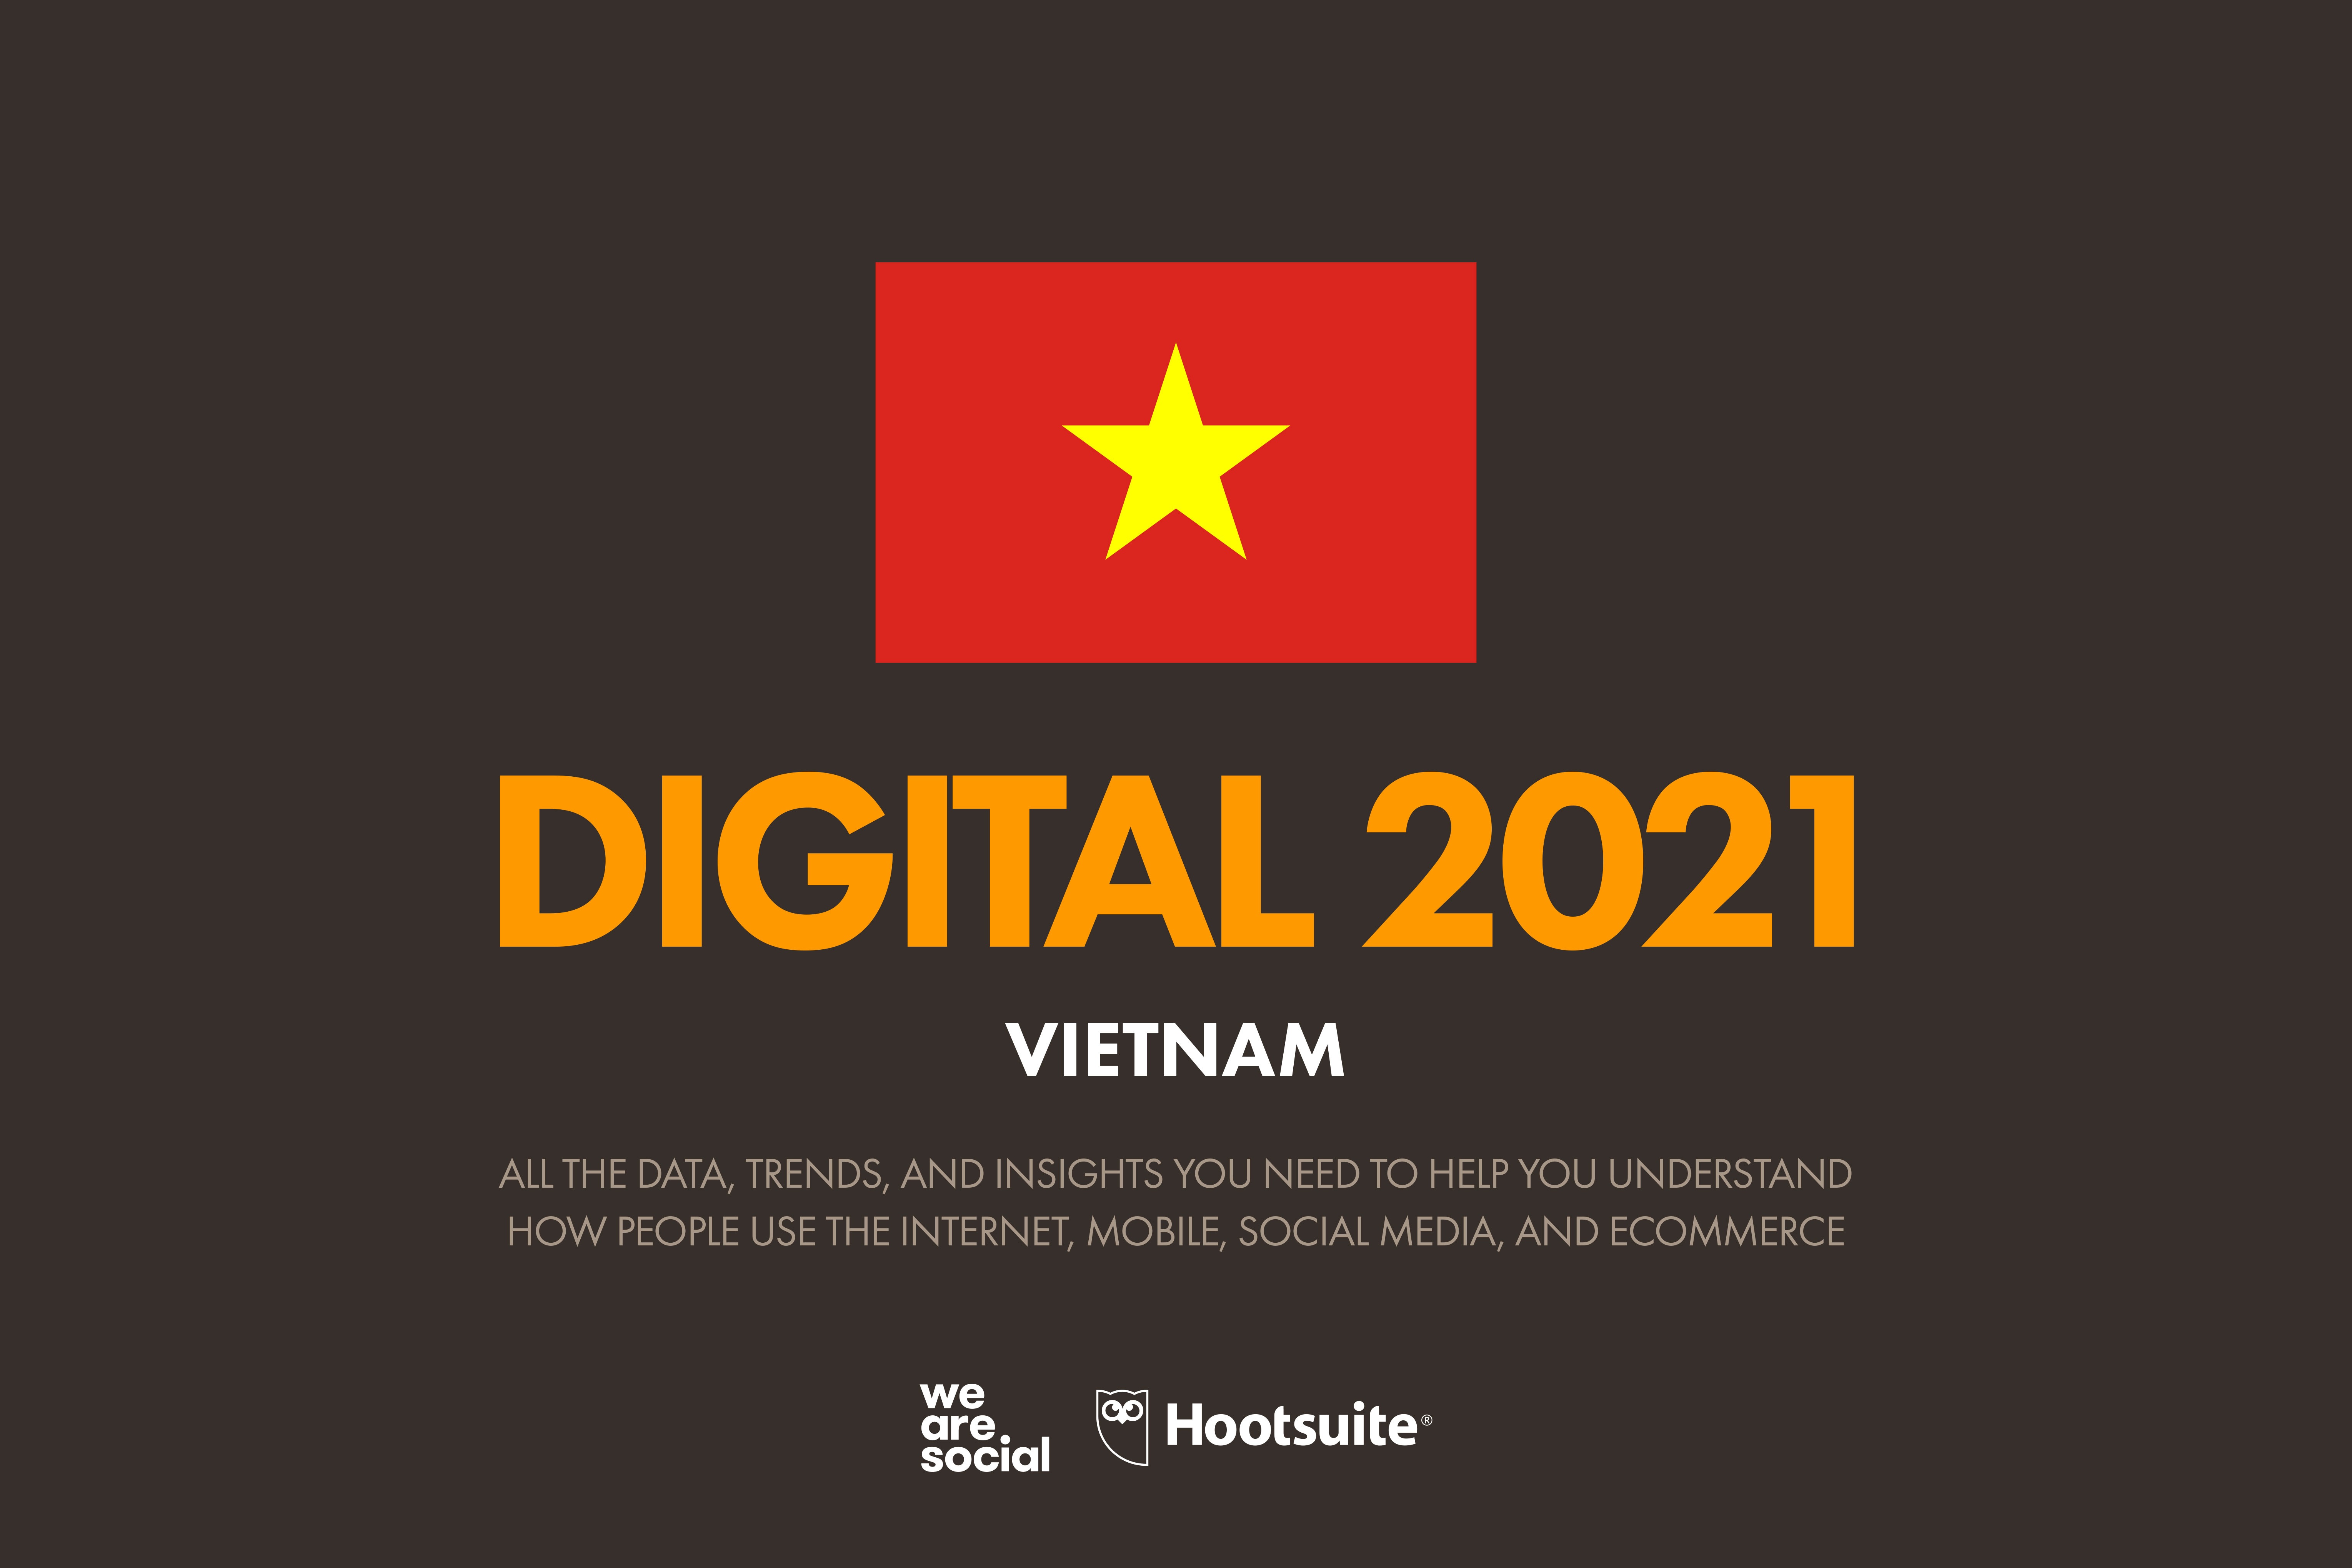 Digital in Vietnam 2021